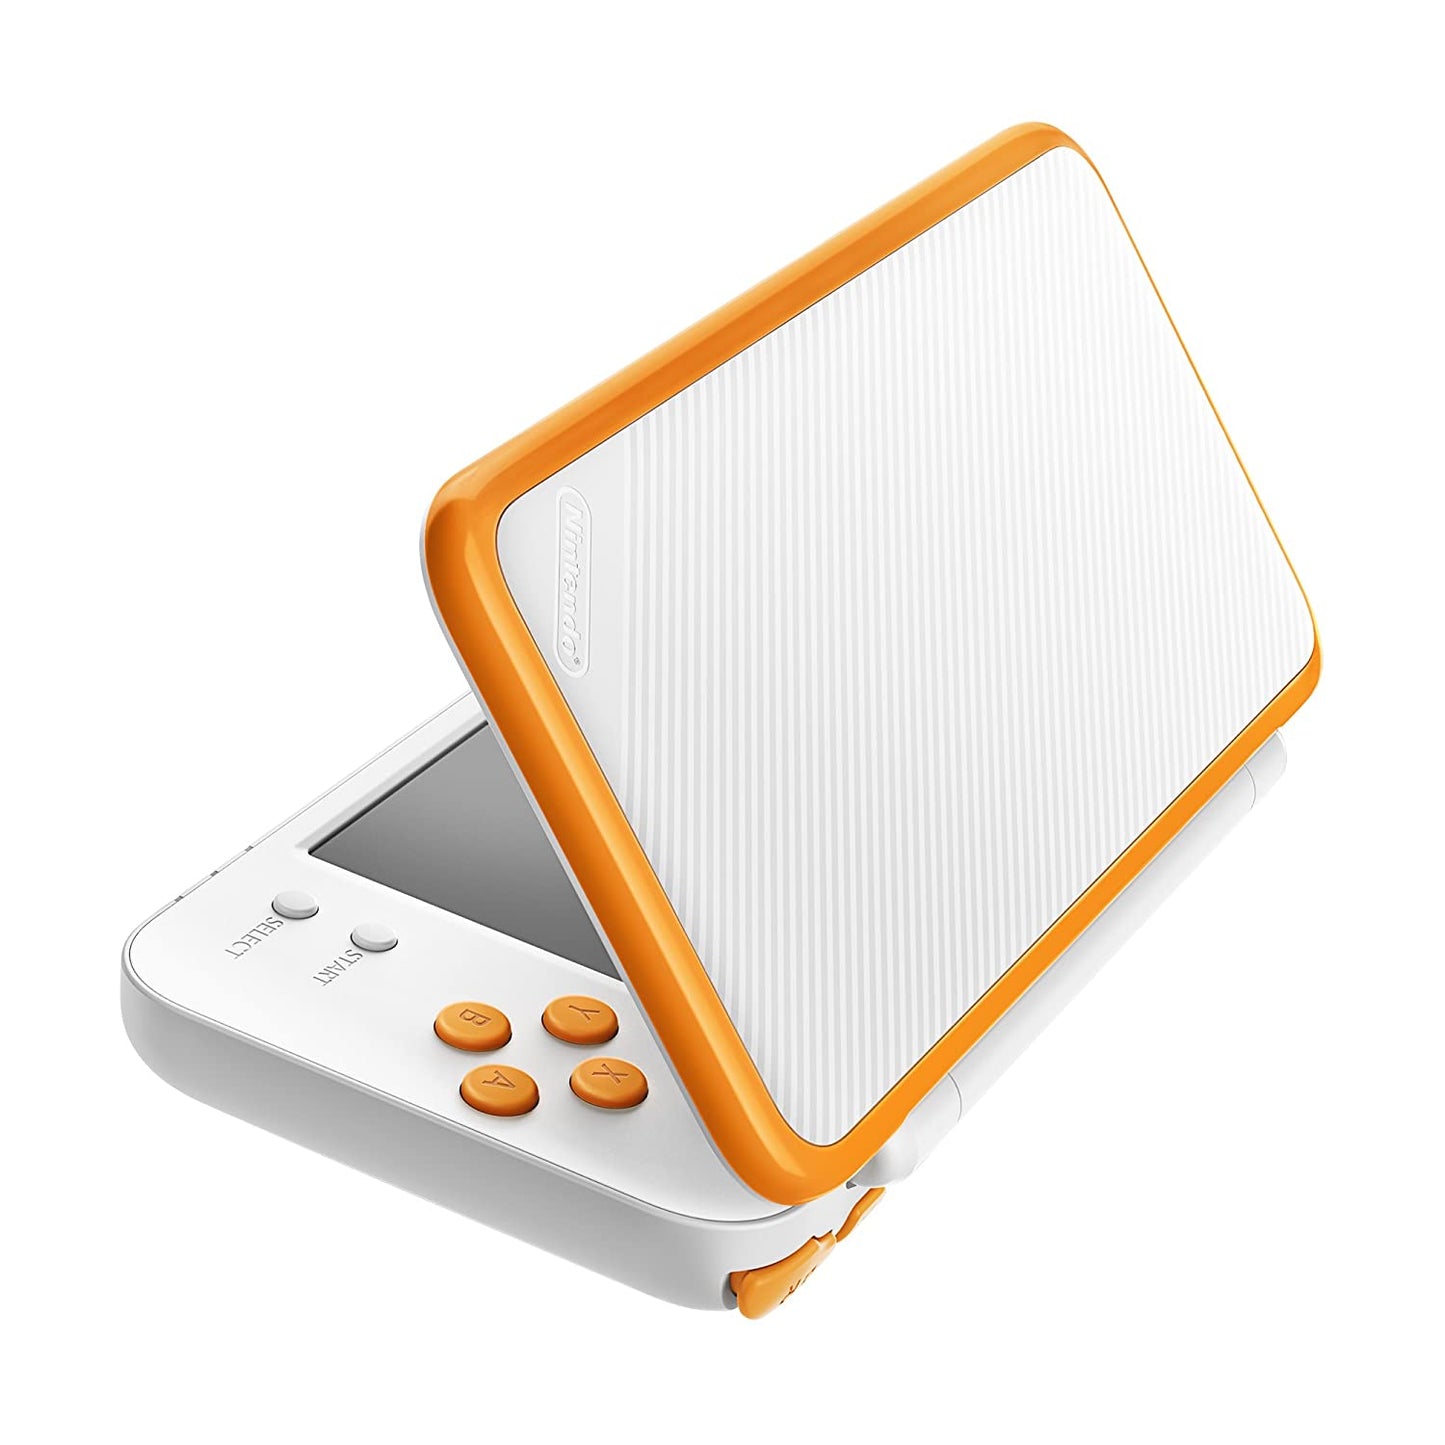 New Nintendo 2DS XL Orange (Nintendo 3DS) (Game System)